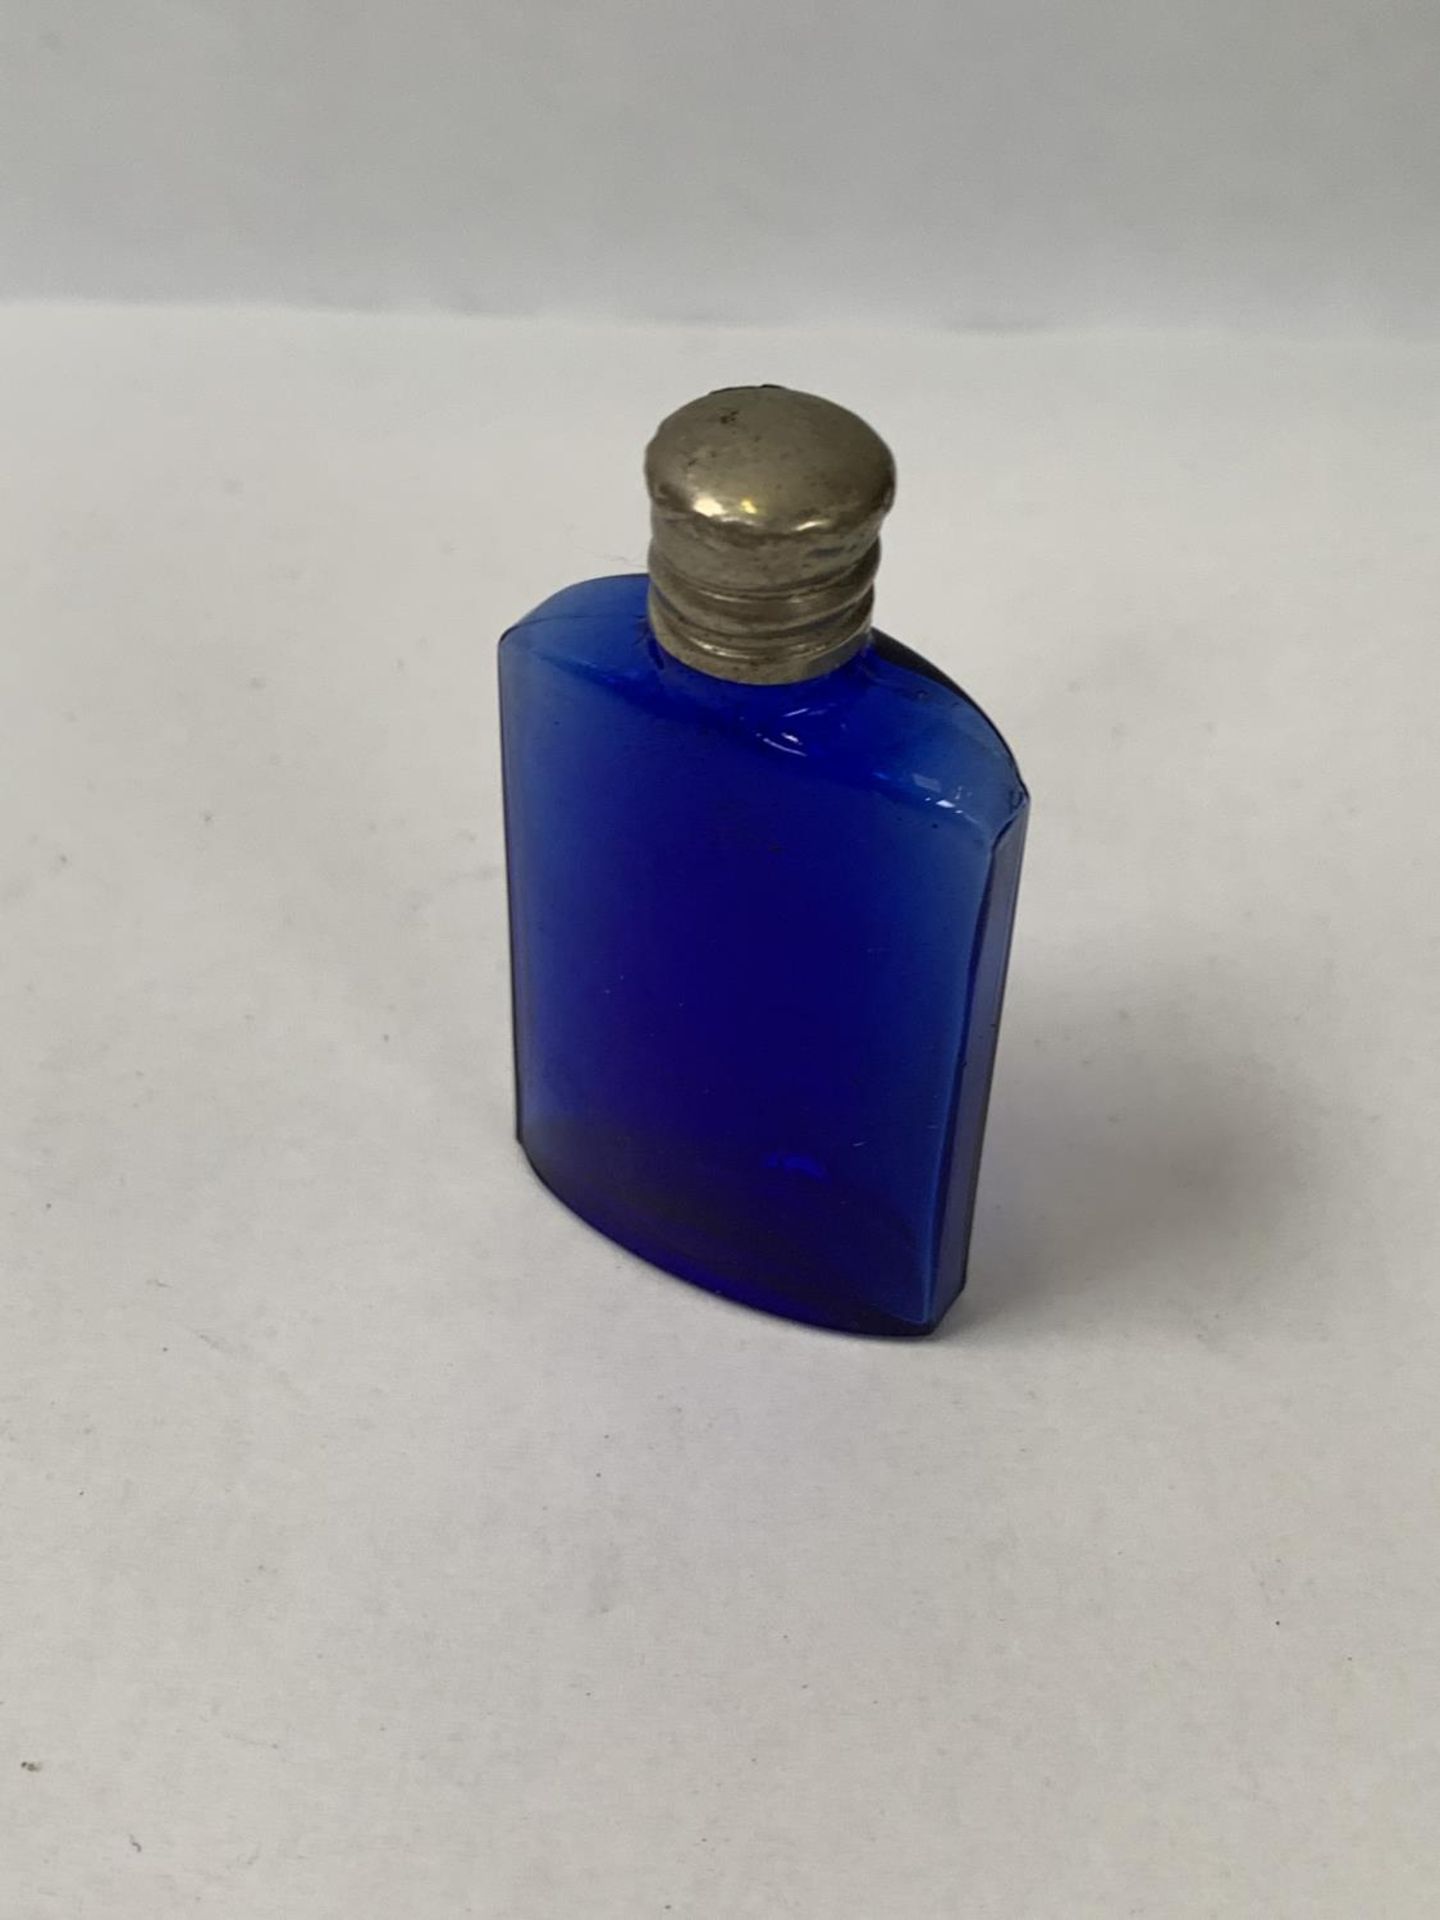 A SMALL BRISTOL BLUE GLASS PERFUME BOTTLE